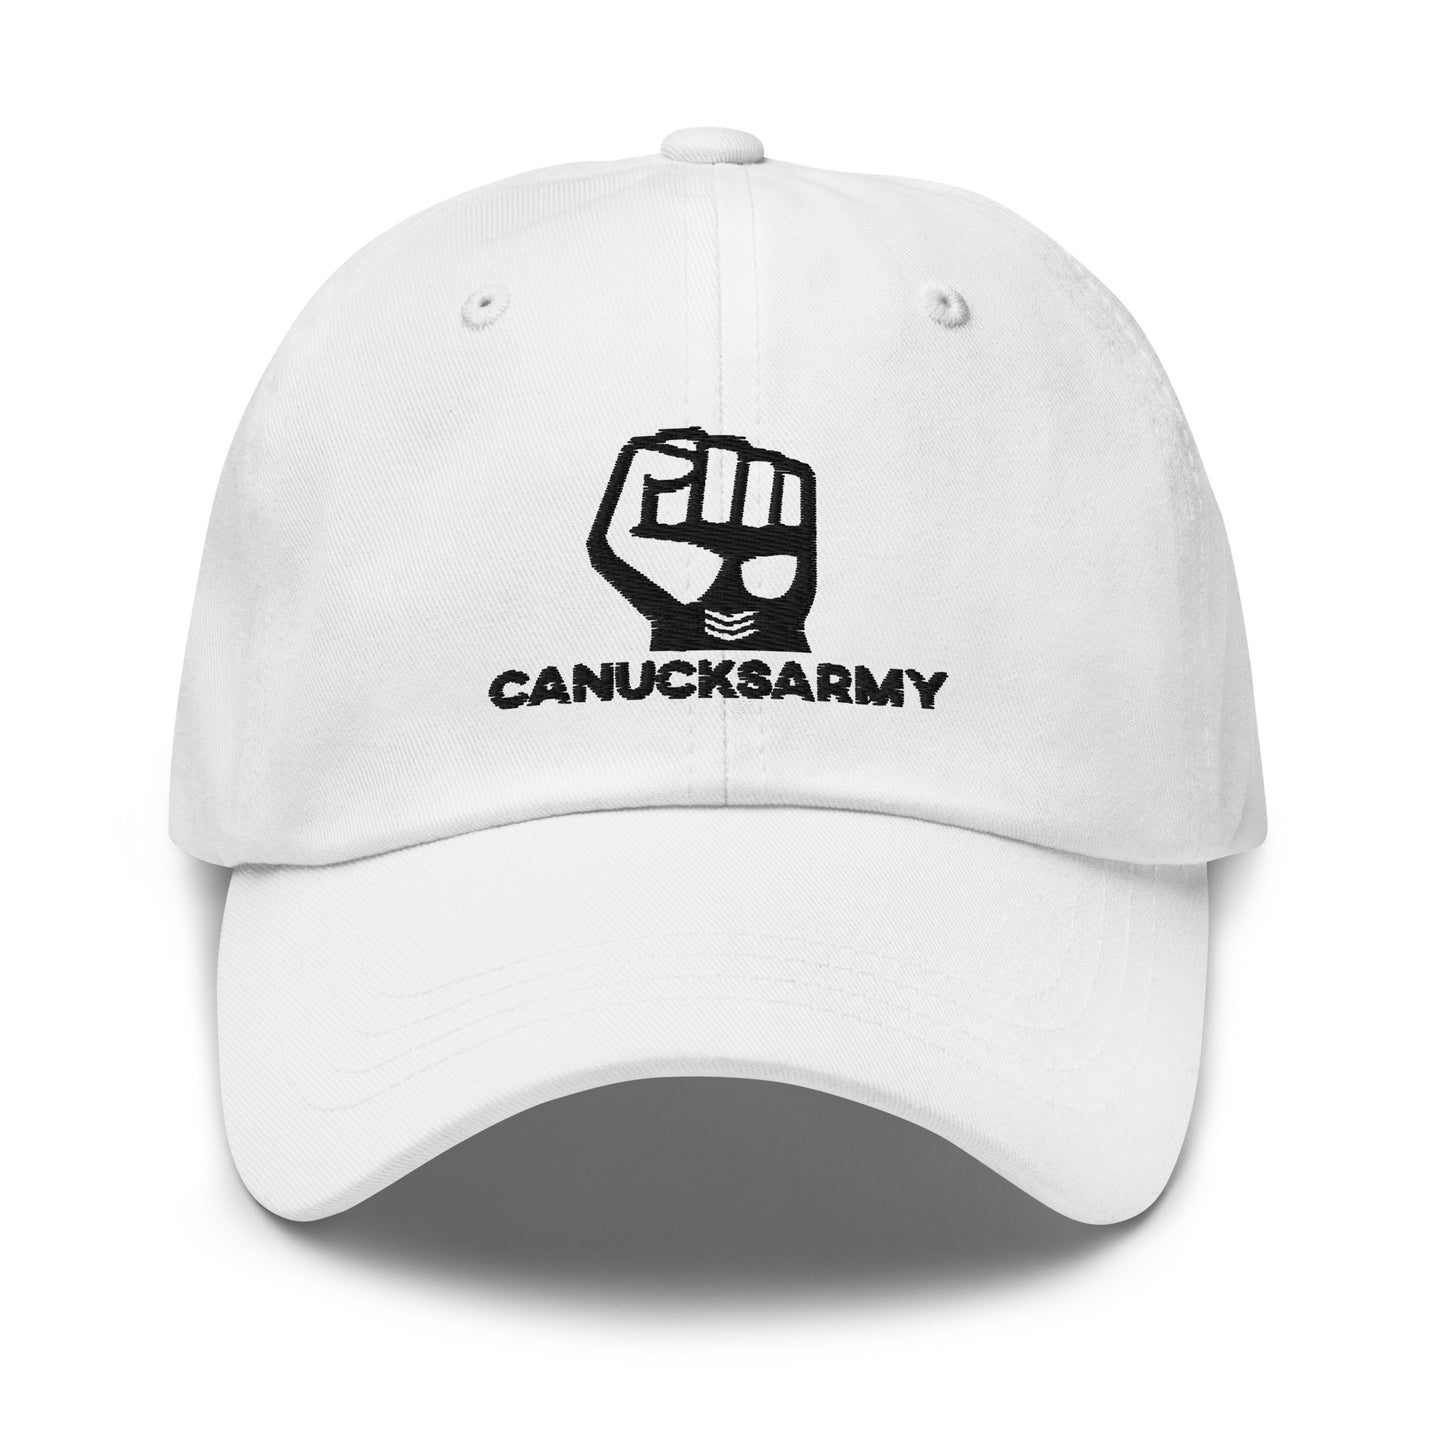 THE CLASSICS - Canucksarmy Dad Hat